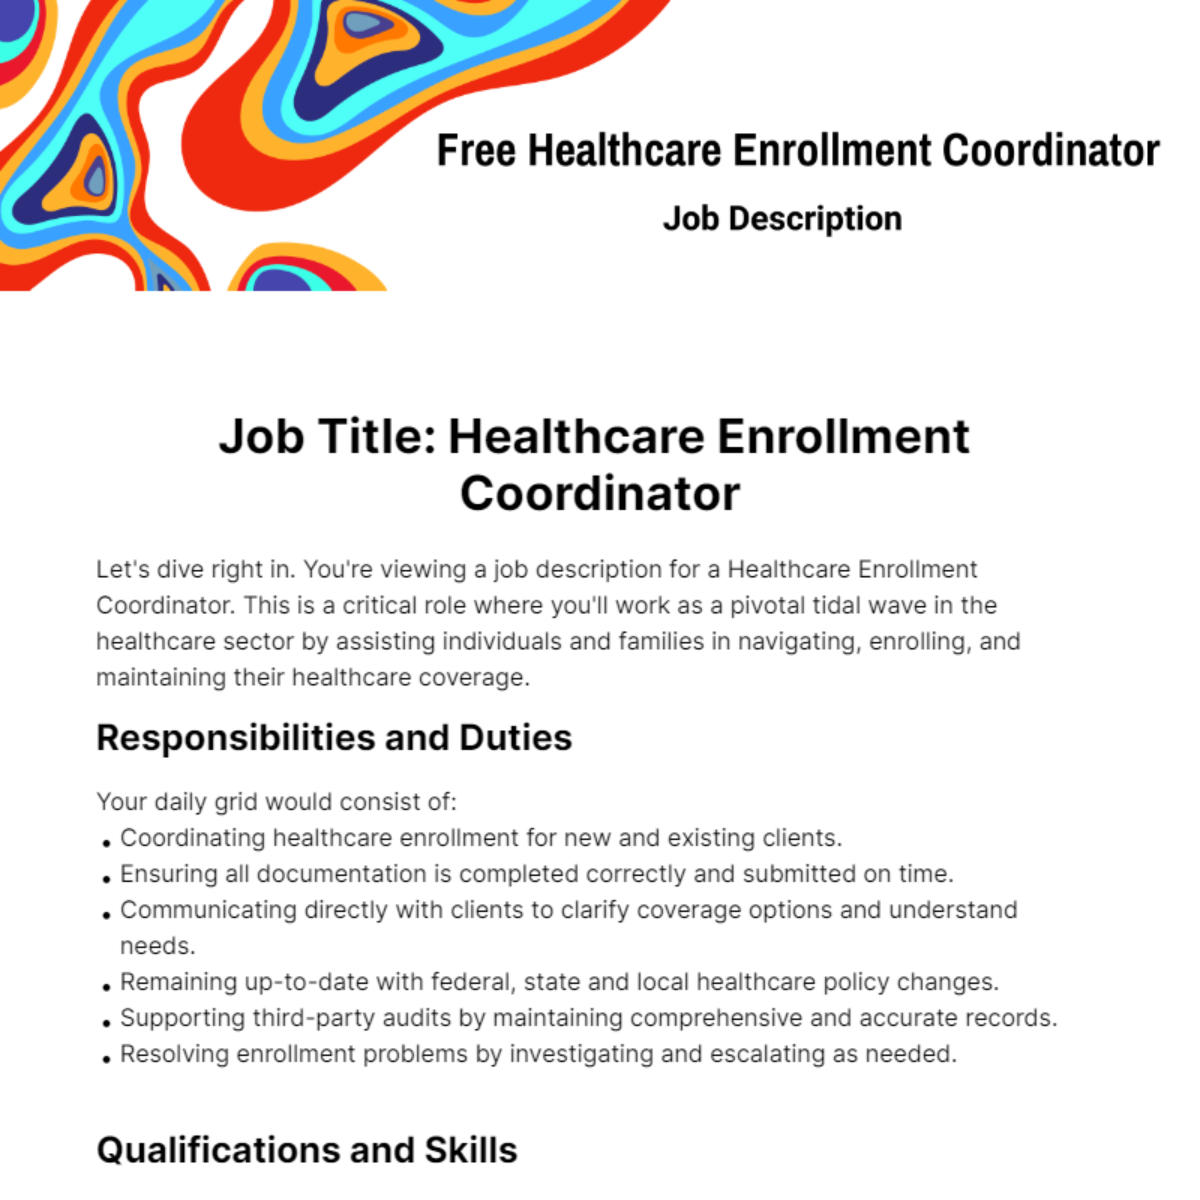 Free Healthcare Enrollment Coordinator Job Description Template